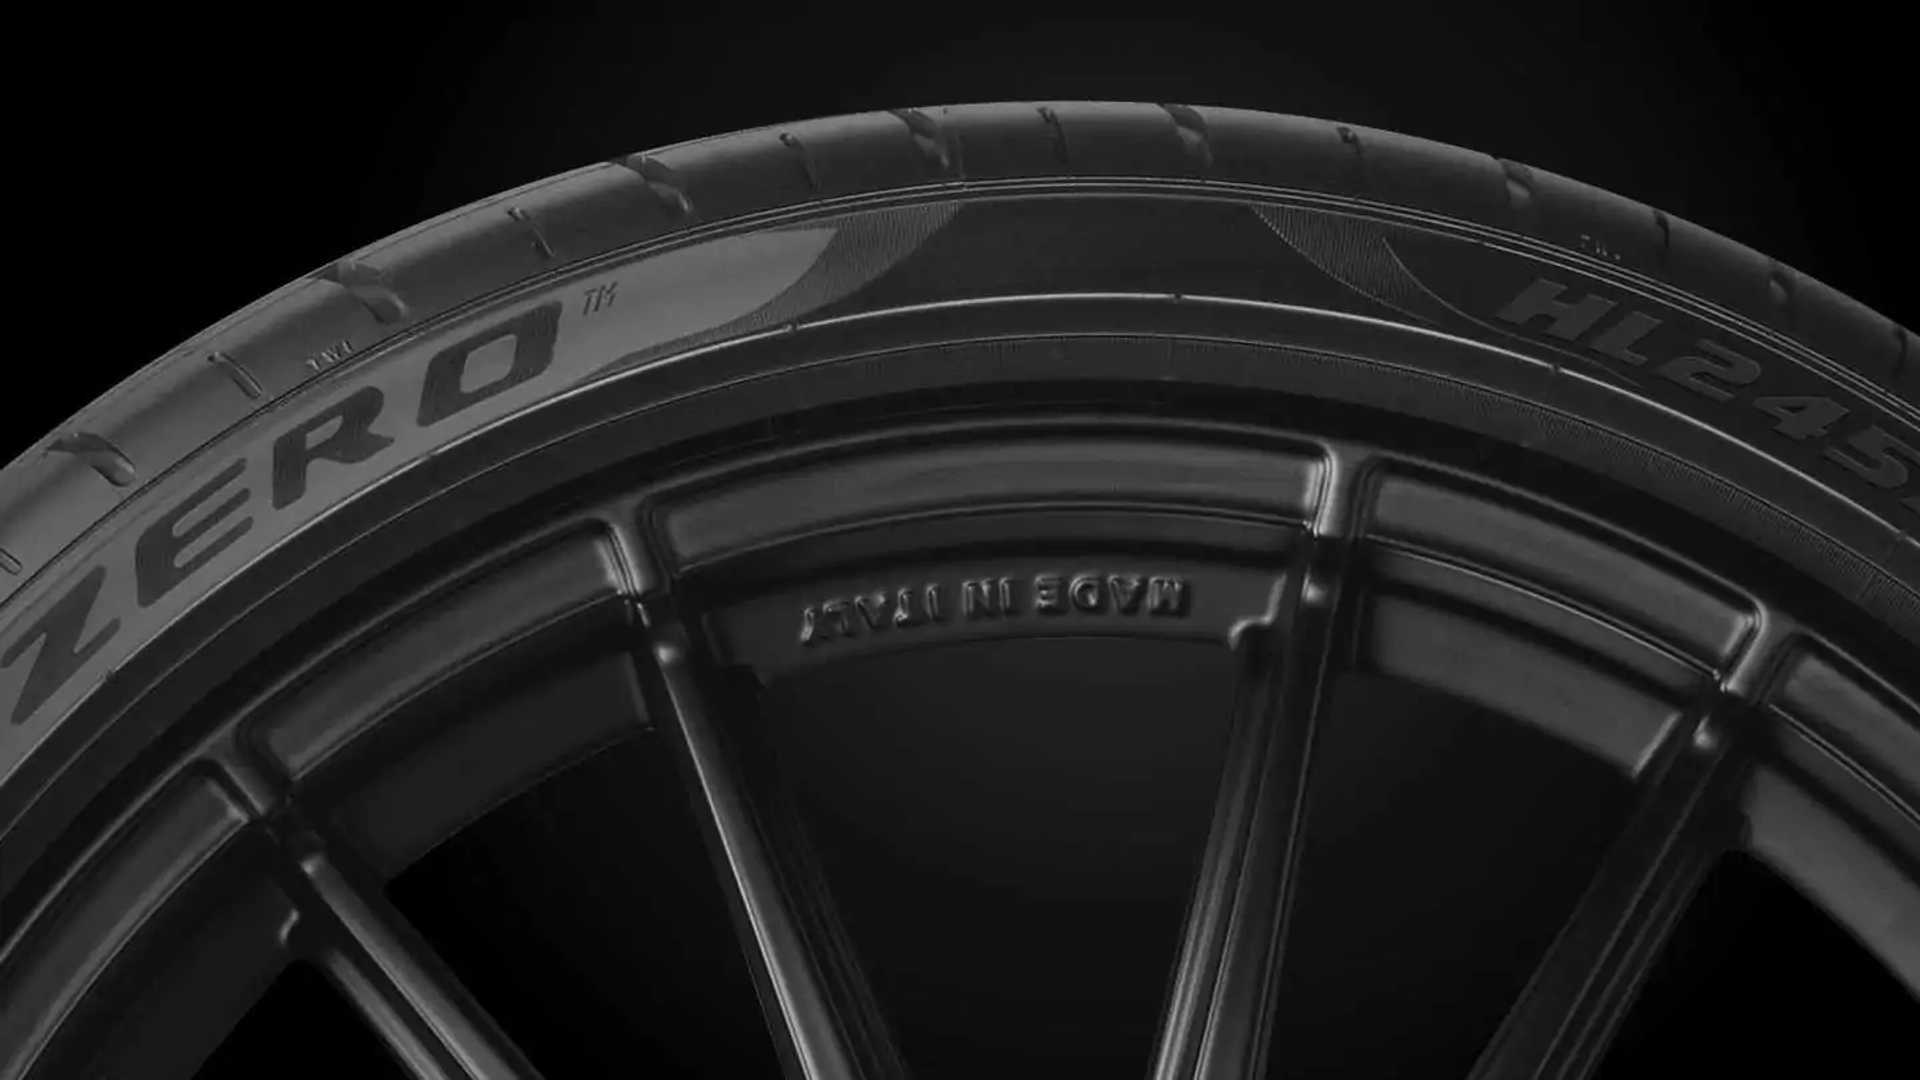 Michelin, Pirelli rangerer højest i JD Power OE Tire Satisfaction Study